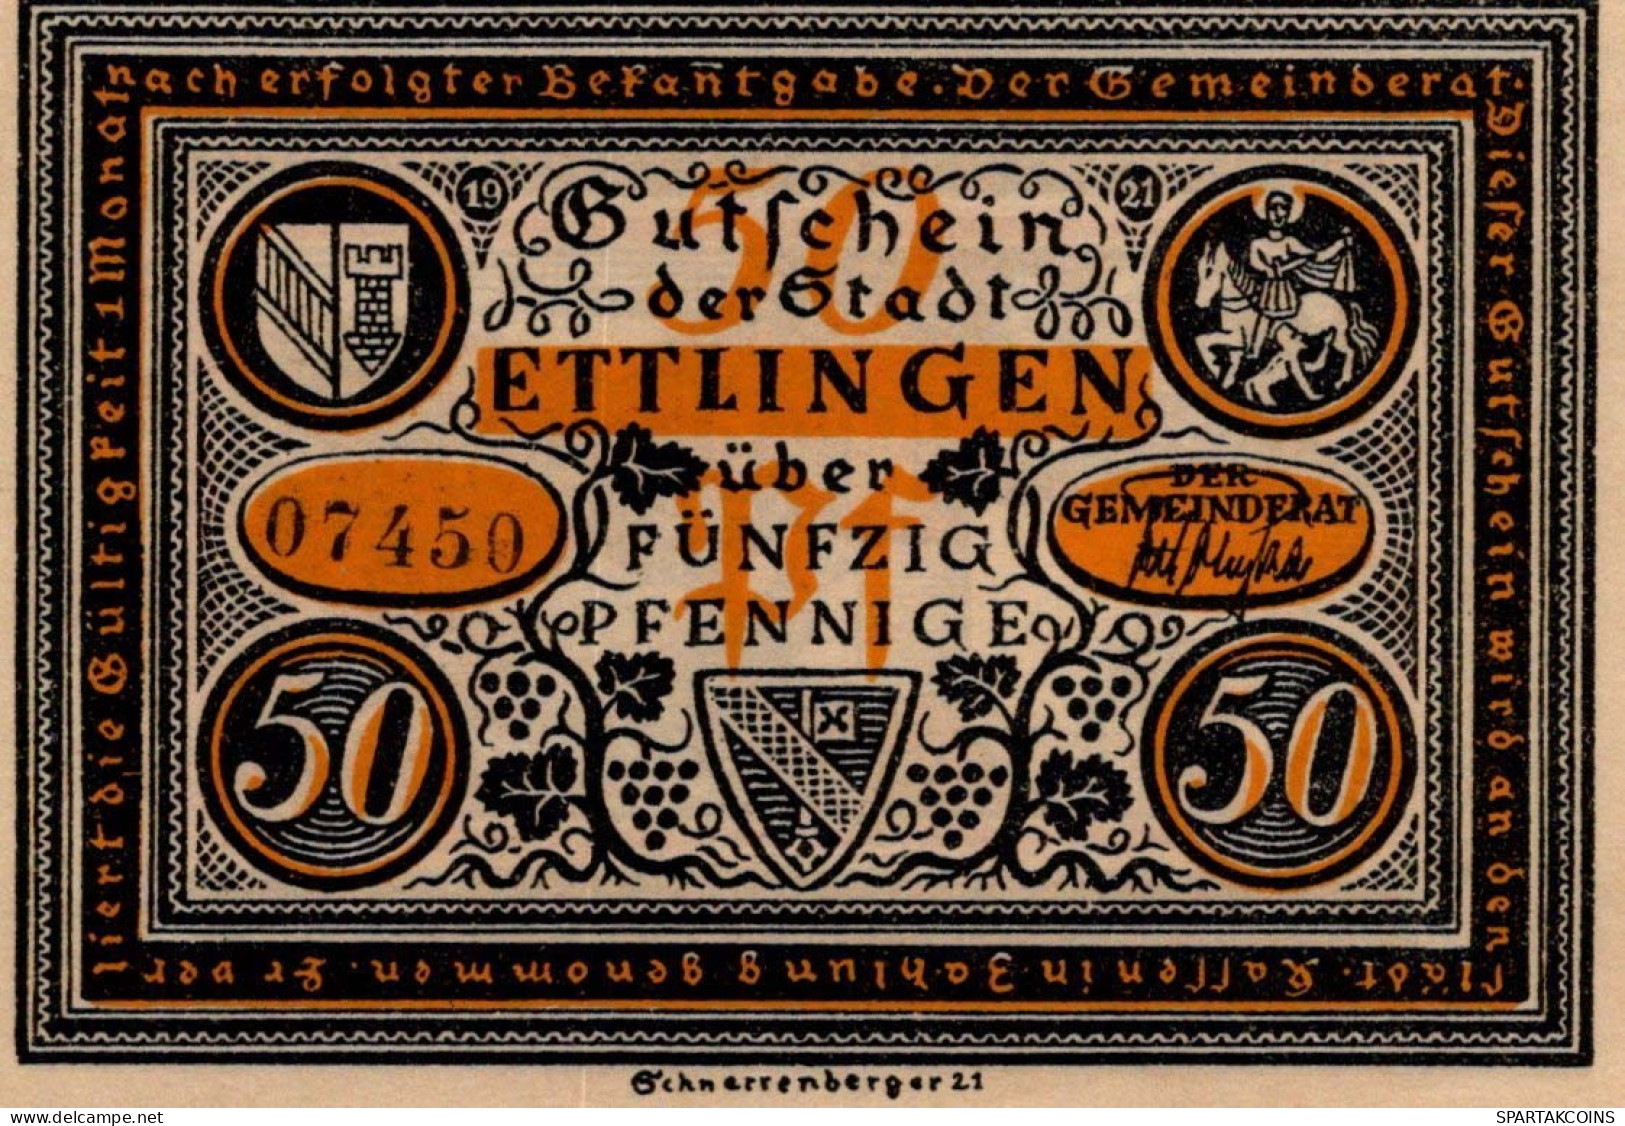 50 PFENNIG 1921 Stadt ETTLINGEN Baden UNC DEUTSCHLAND Notgeld Banknote #PB360 - [11] Local Banknote Issues